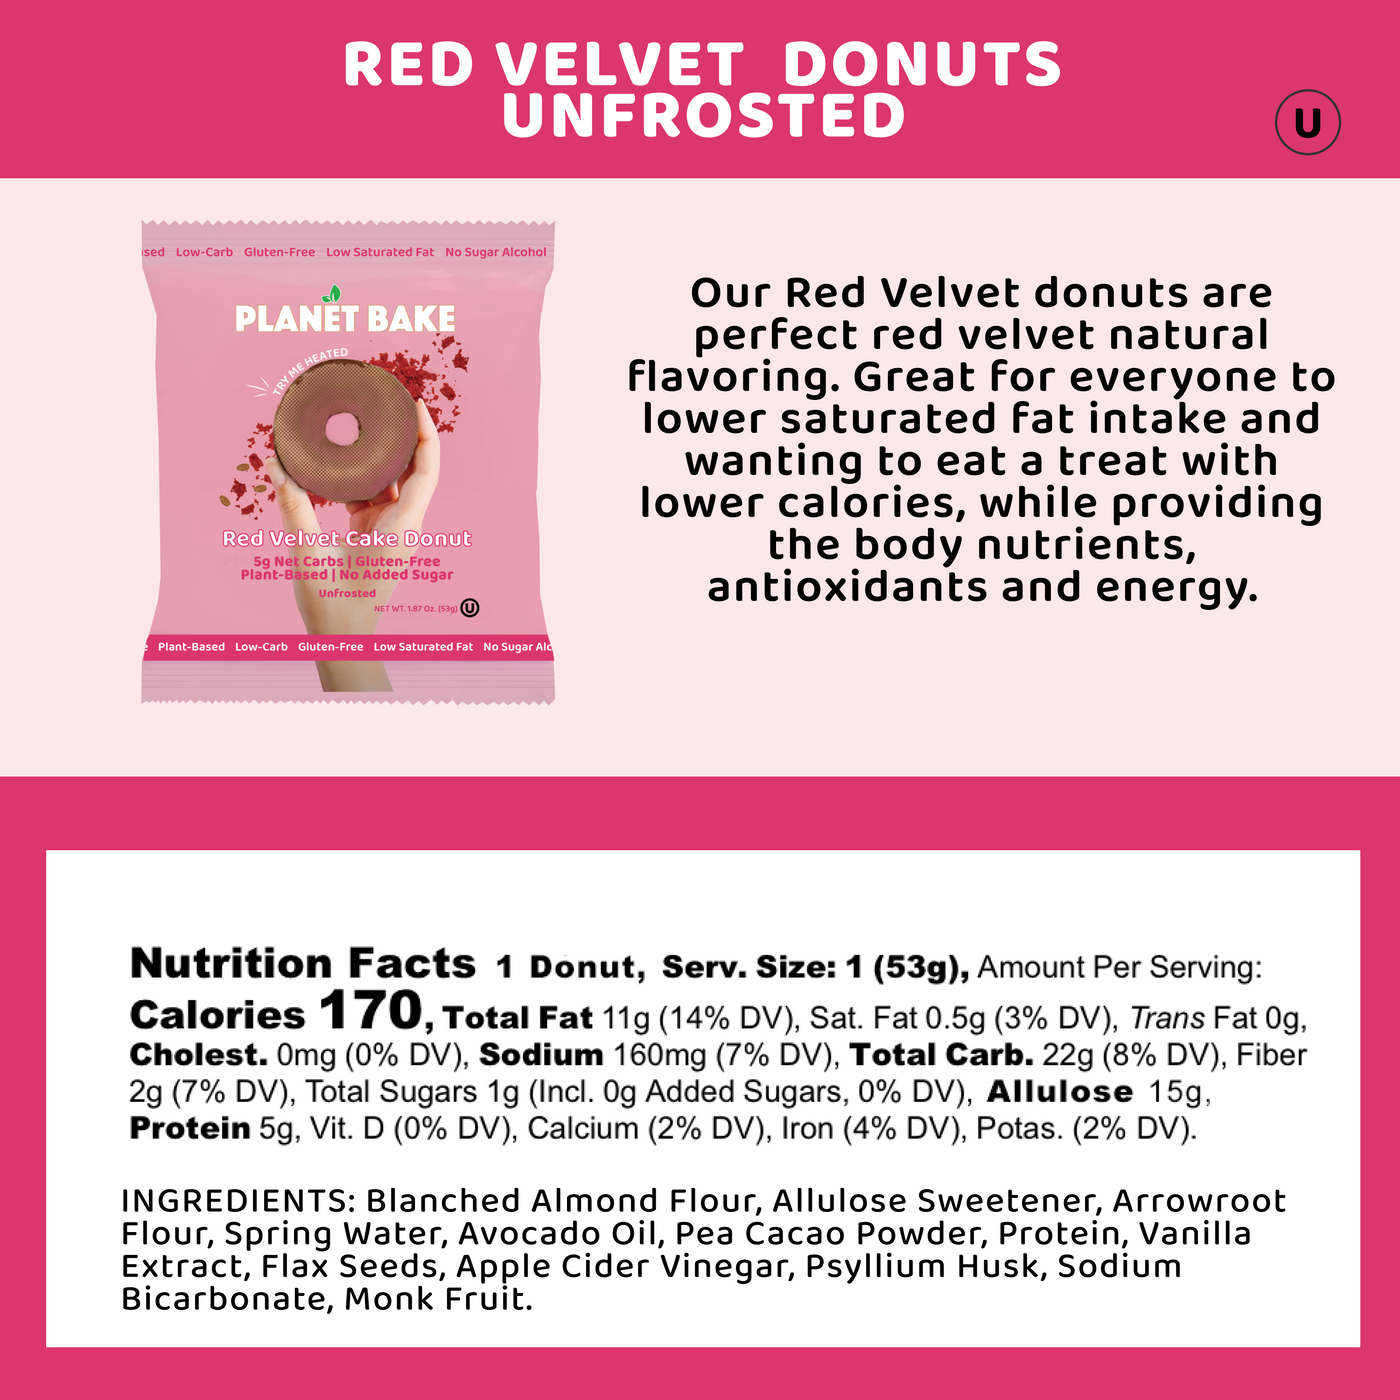 Unfrosted Red Velvet Donuts (8pack)